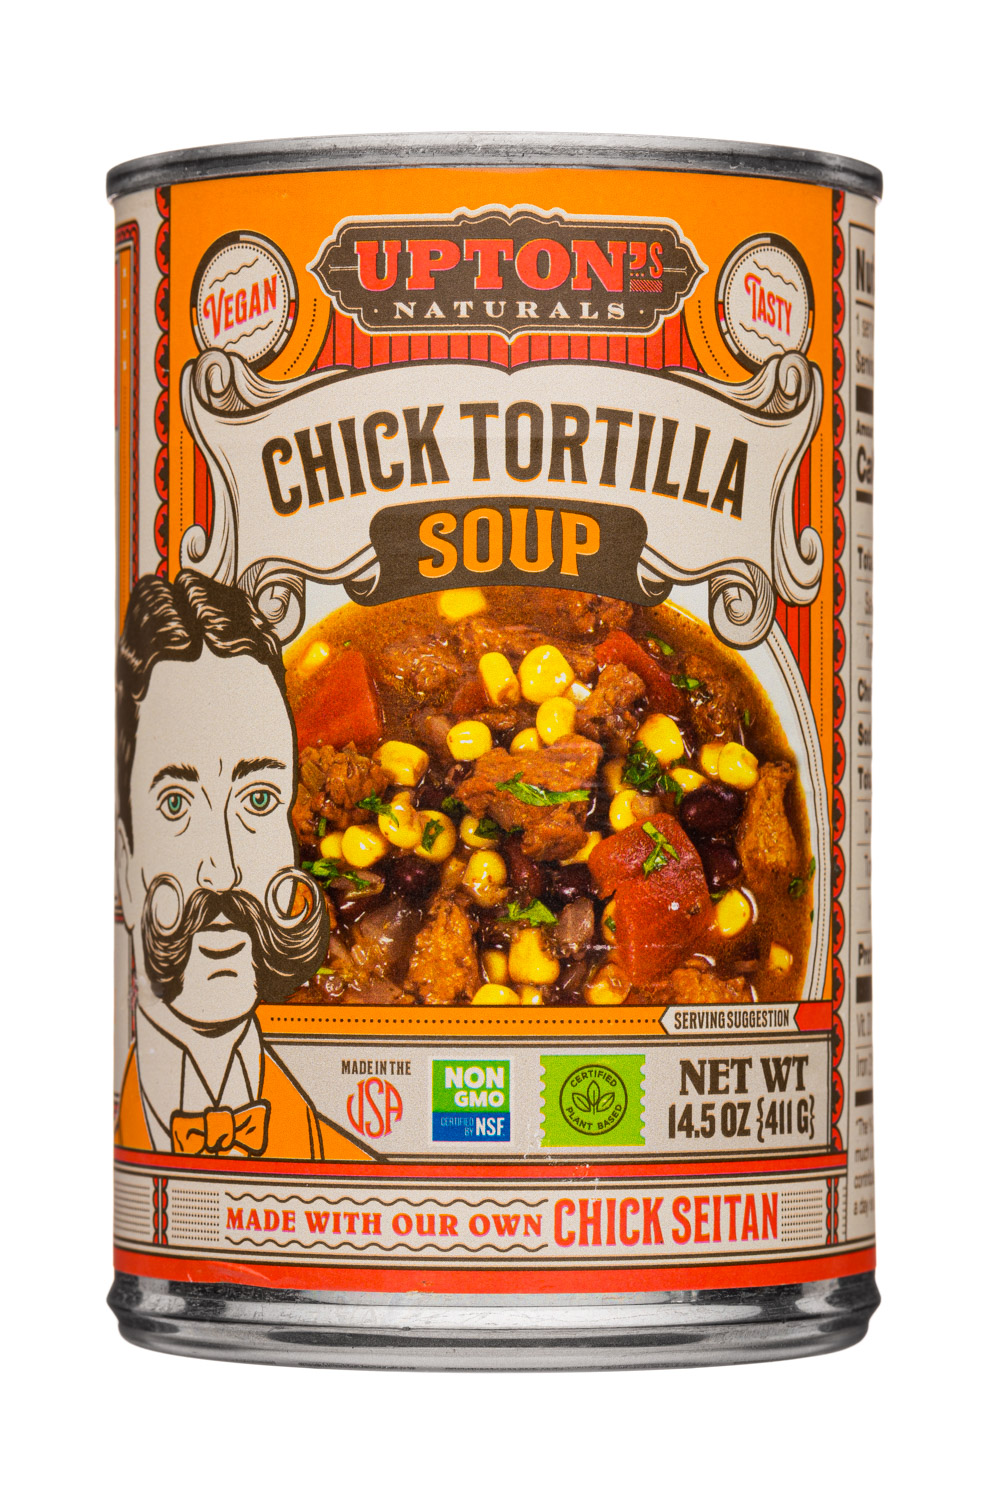 Chick Tortilla Soup